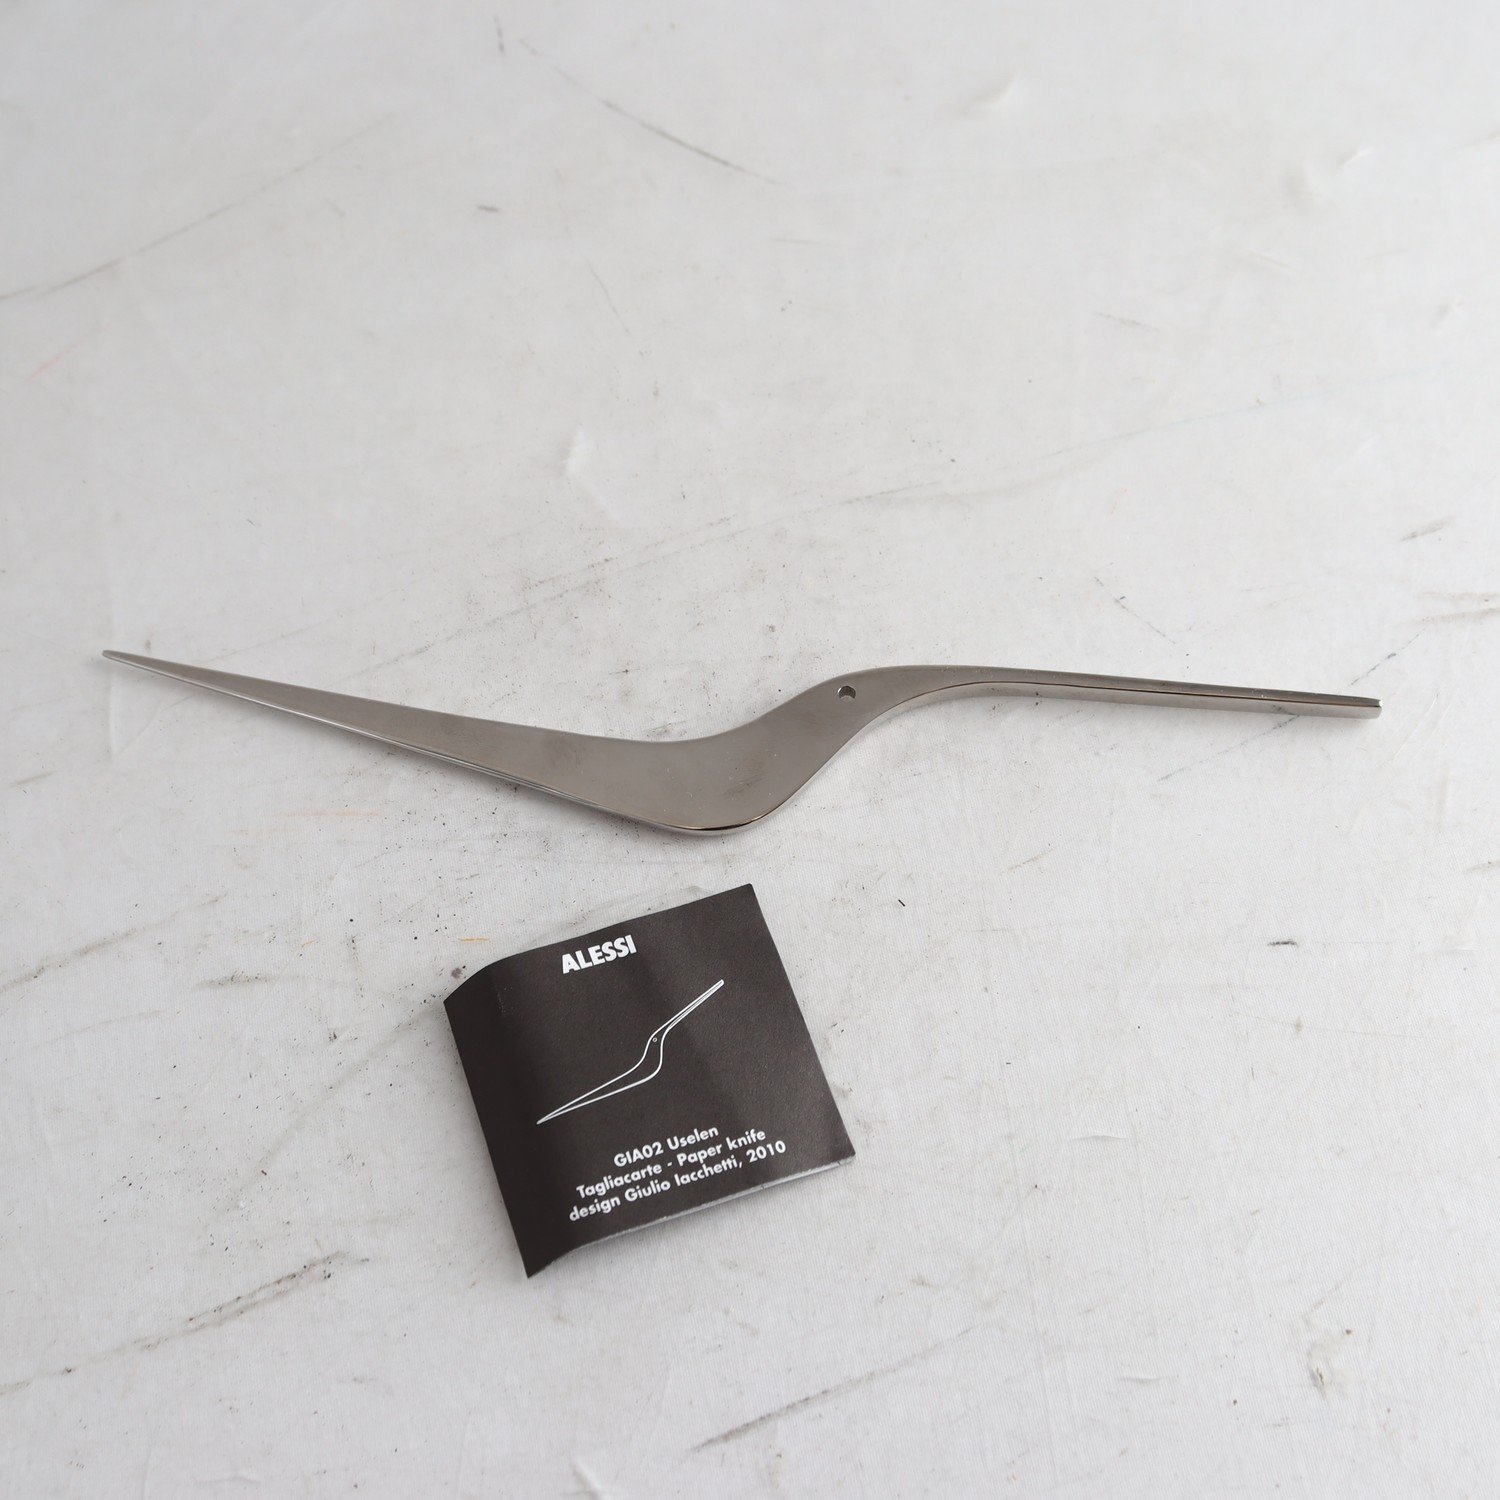 Brevkniv, rostfritt stål, ”GIA02”, Alessi.